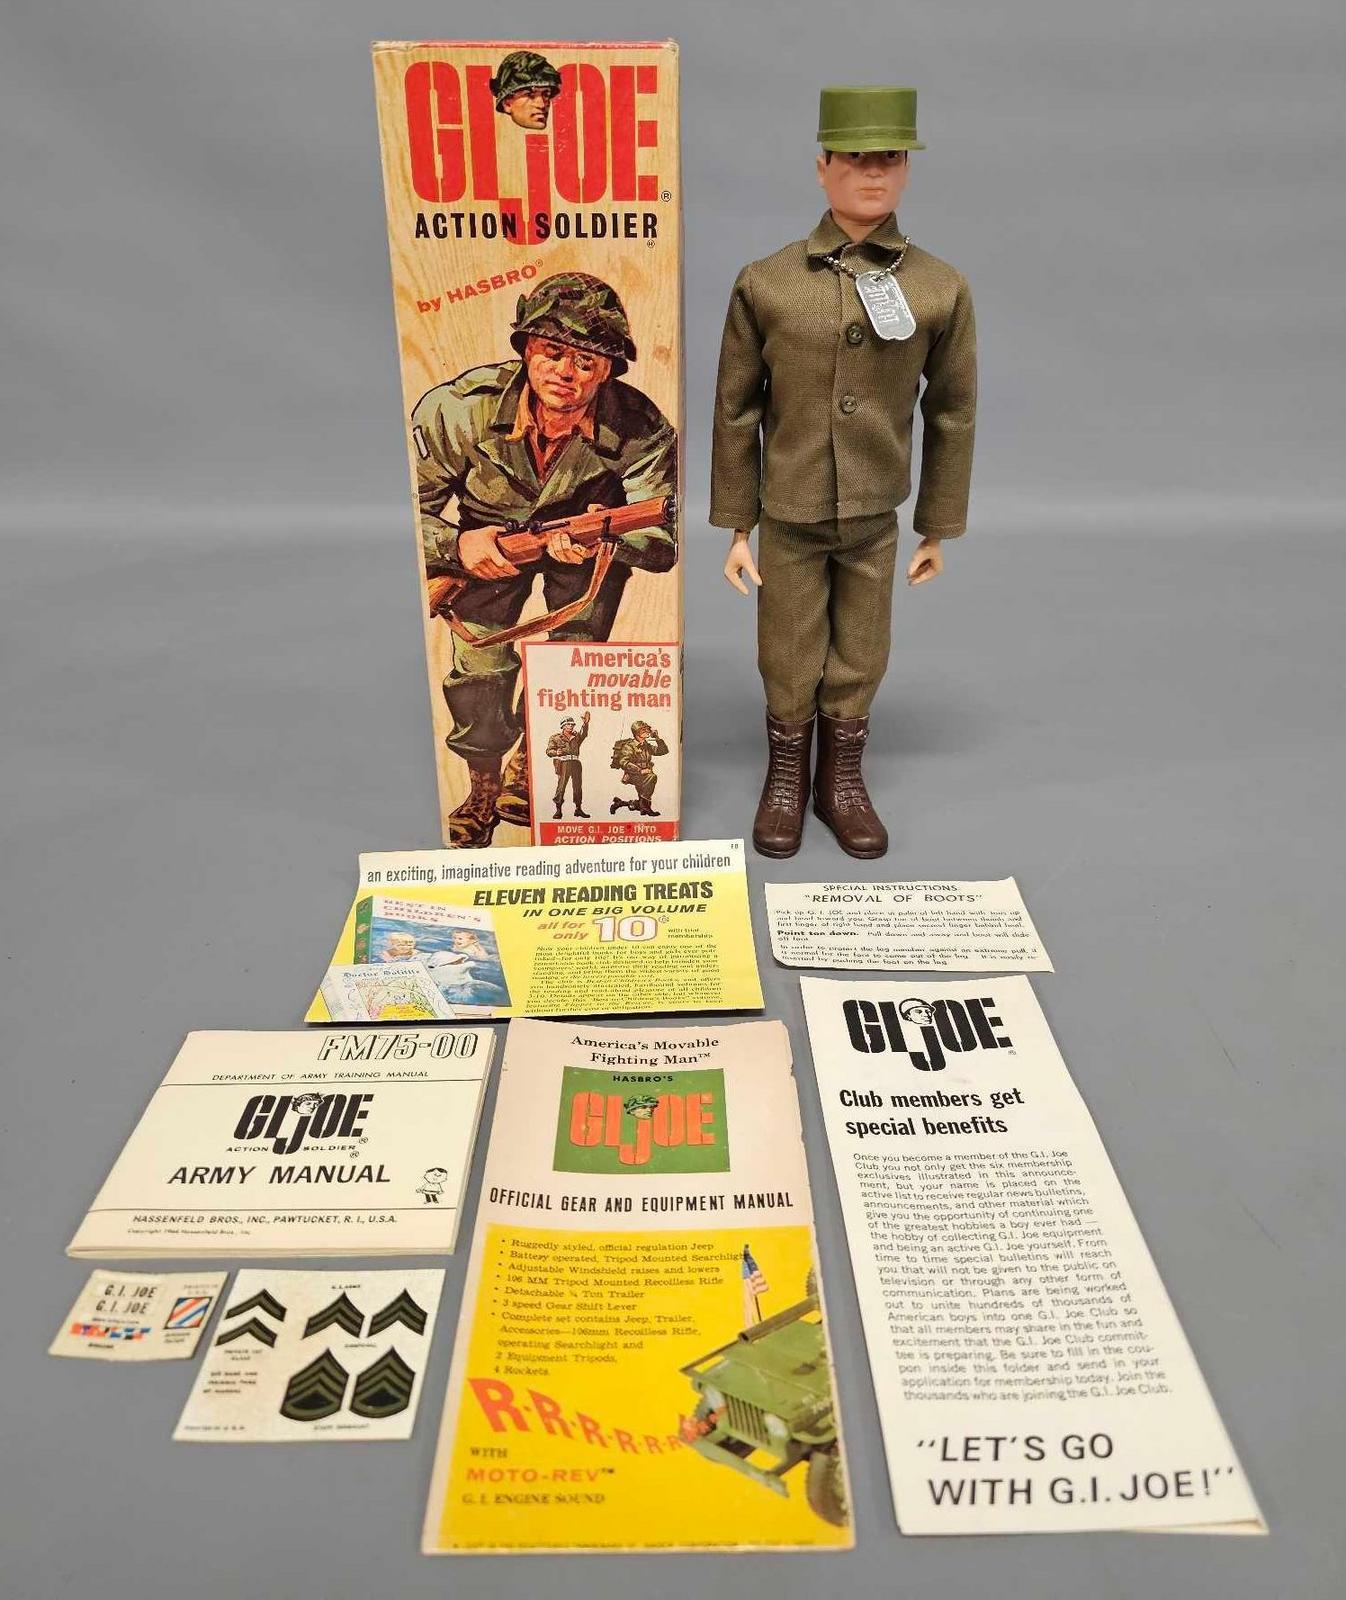 Fantastic Hasbro GI Joe Action Soldier in original box 7500